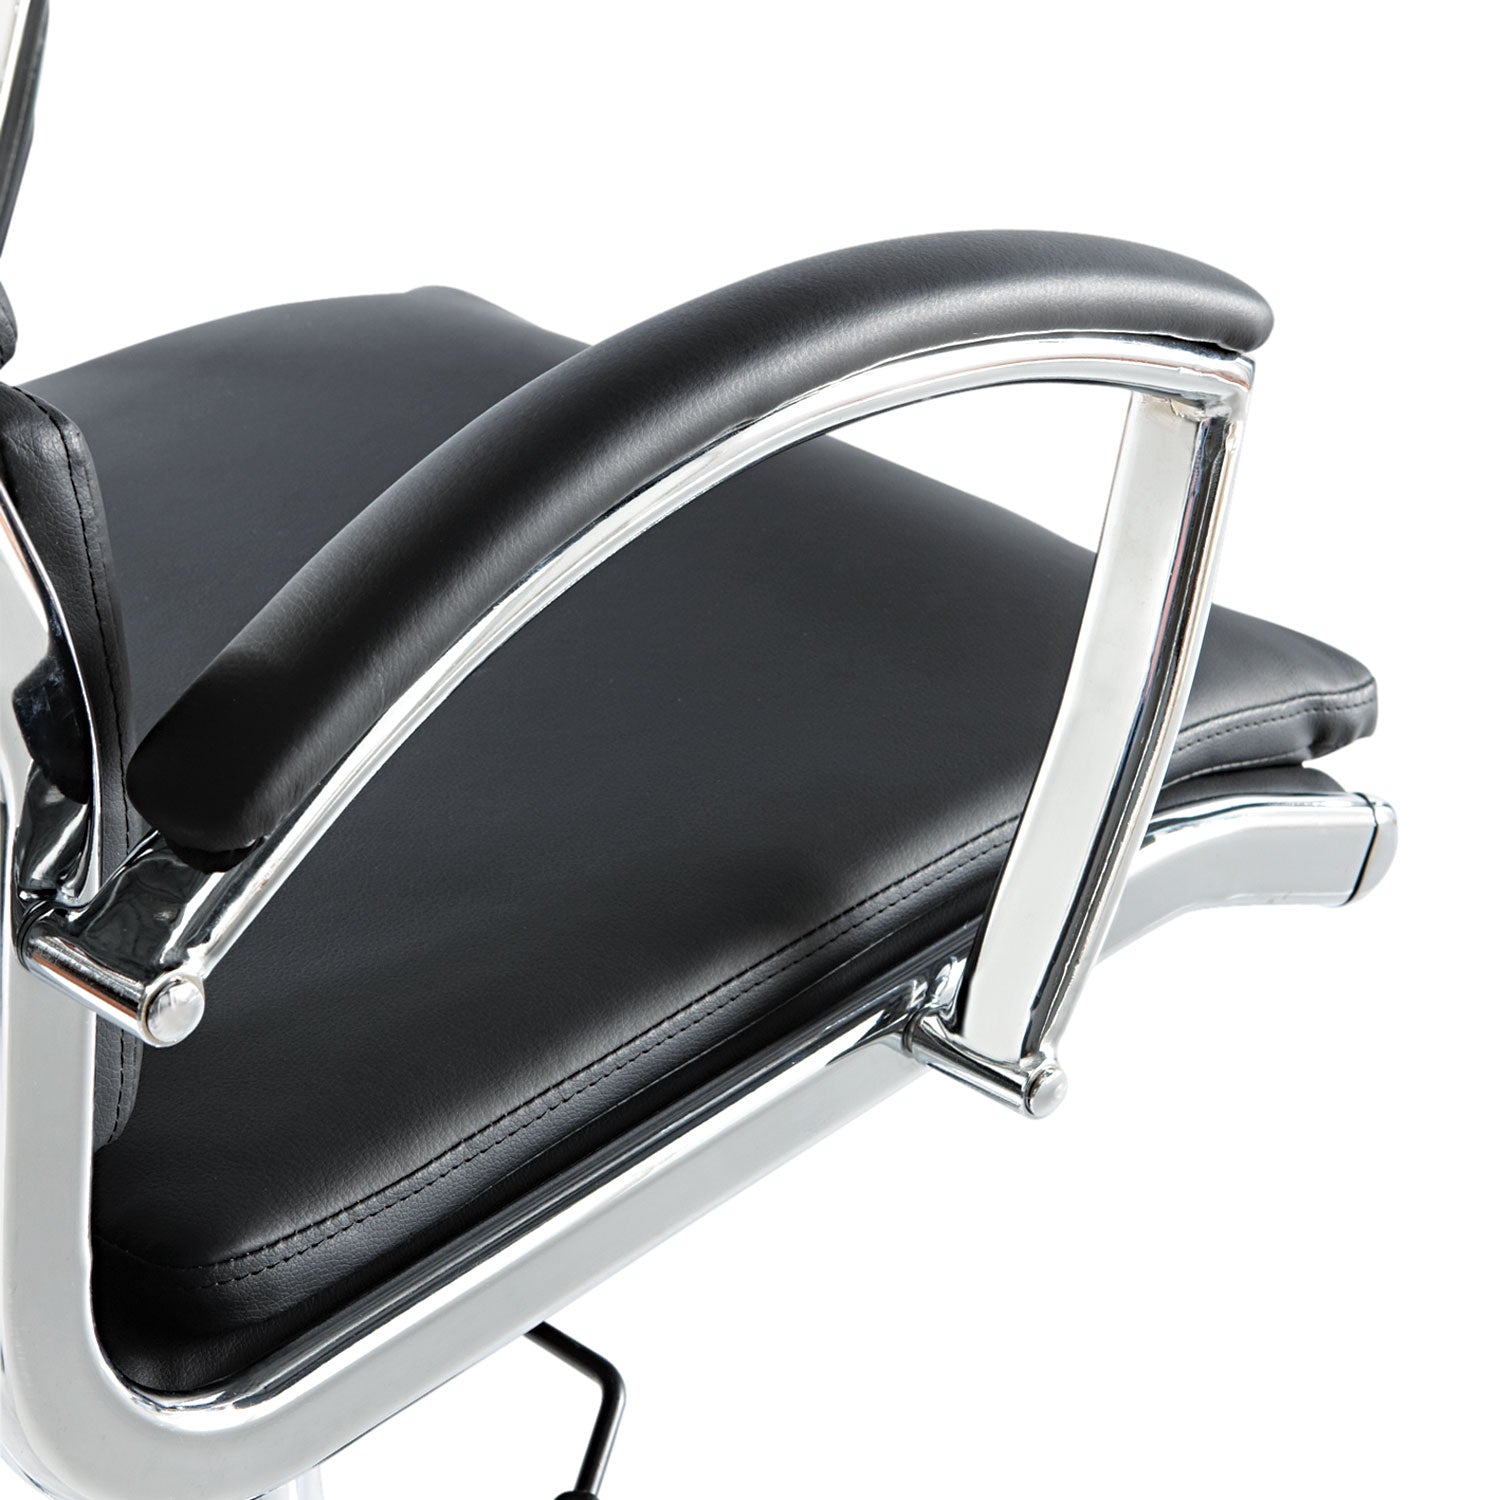 Alera Neratoli High-Back Slim Profile Chair, Faux Leather, 275 lb Cap, 17.32" to 21.25" Seat Height, Black Seat/Back, Chrome - 